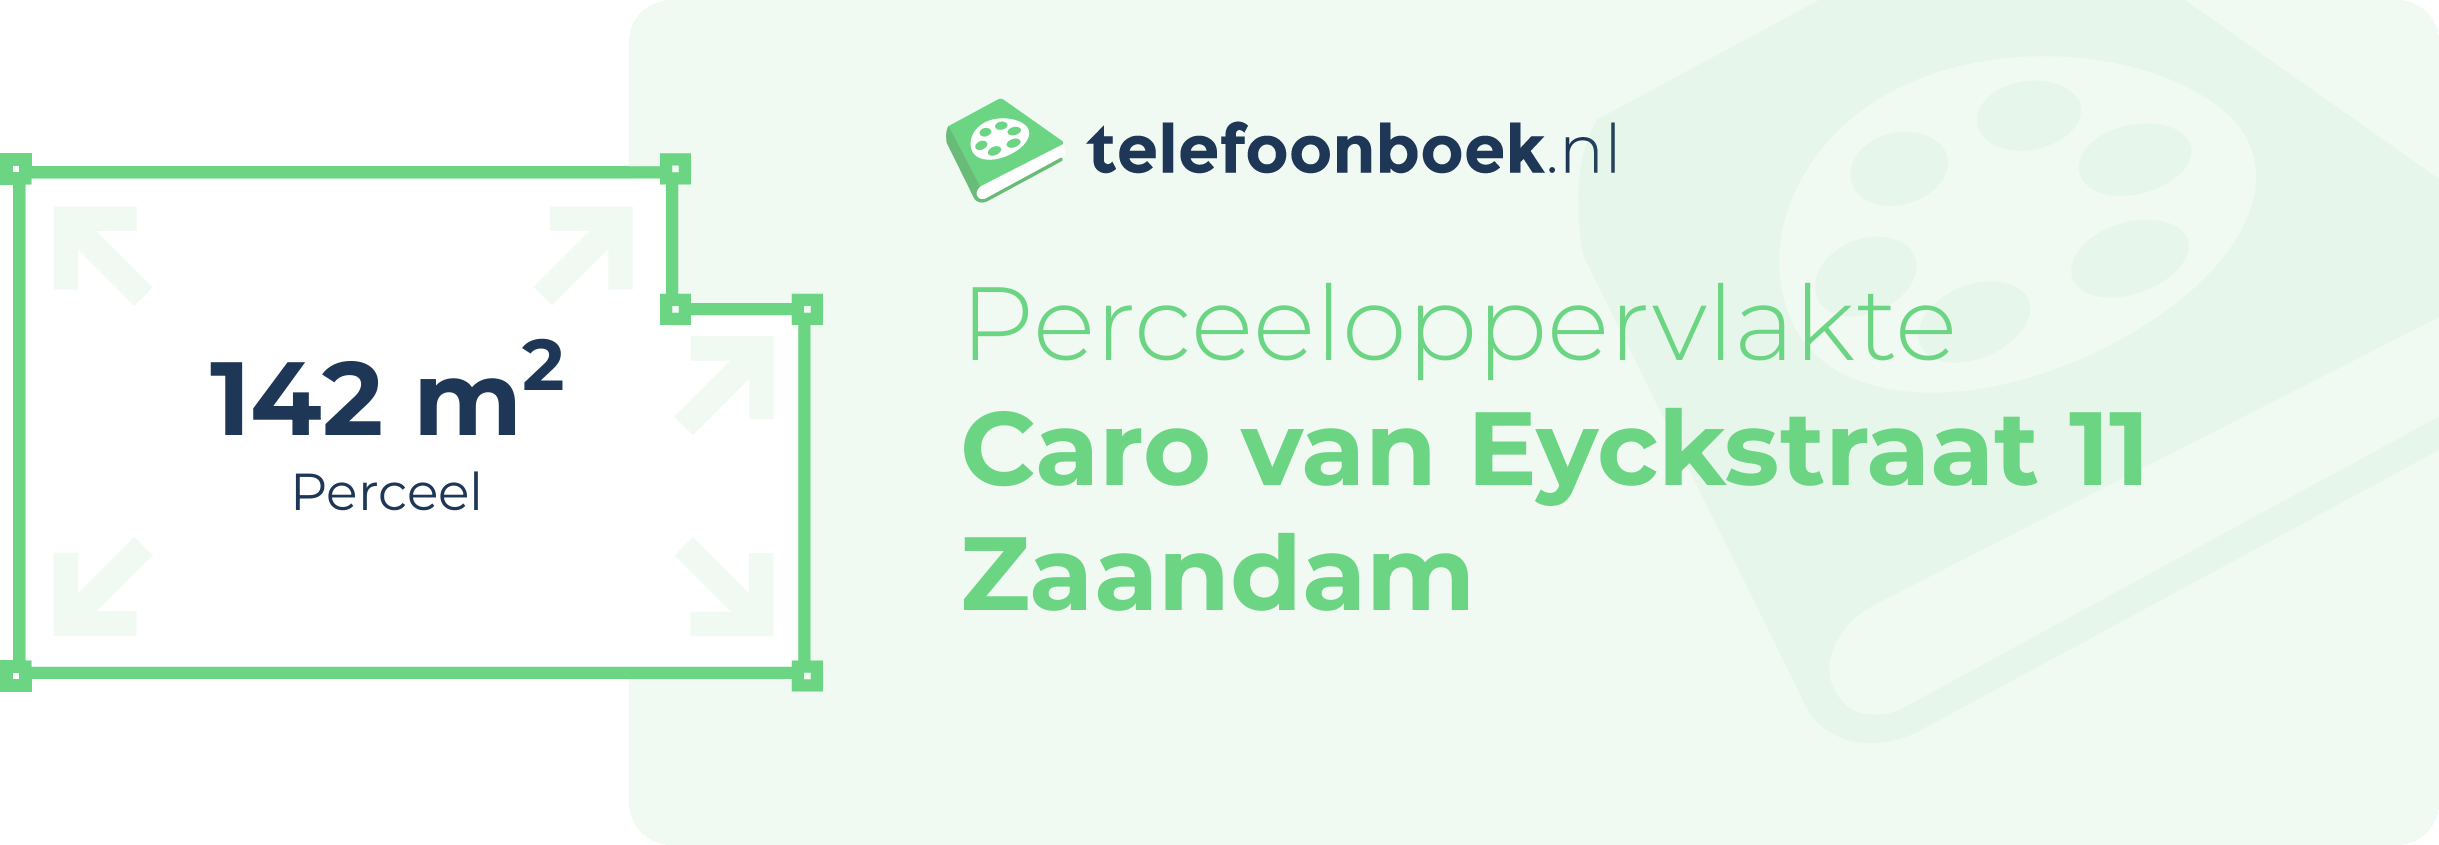 Perceeloppervlakte Caro Van Eyckstraat 11 Zaandam